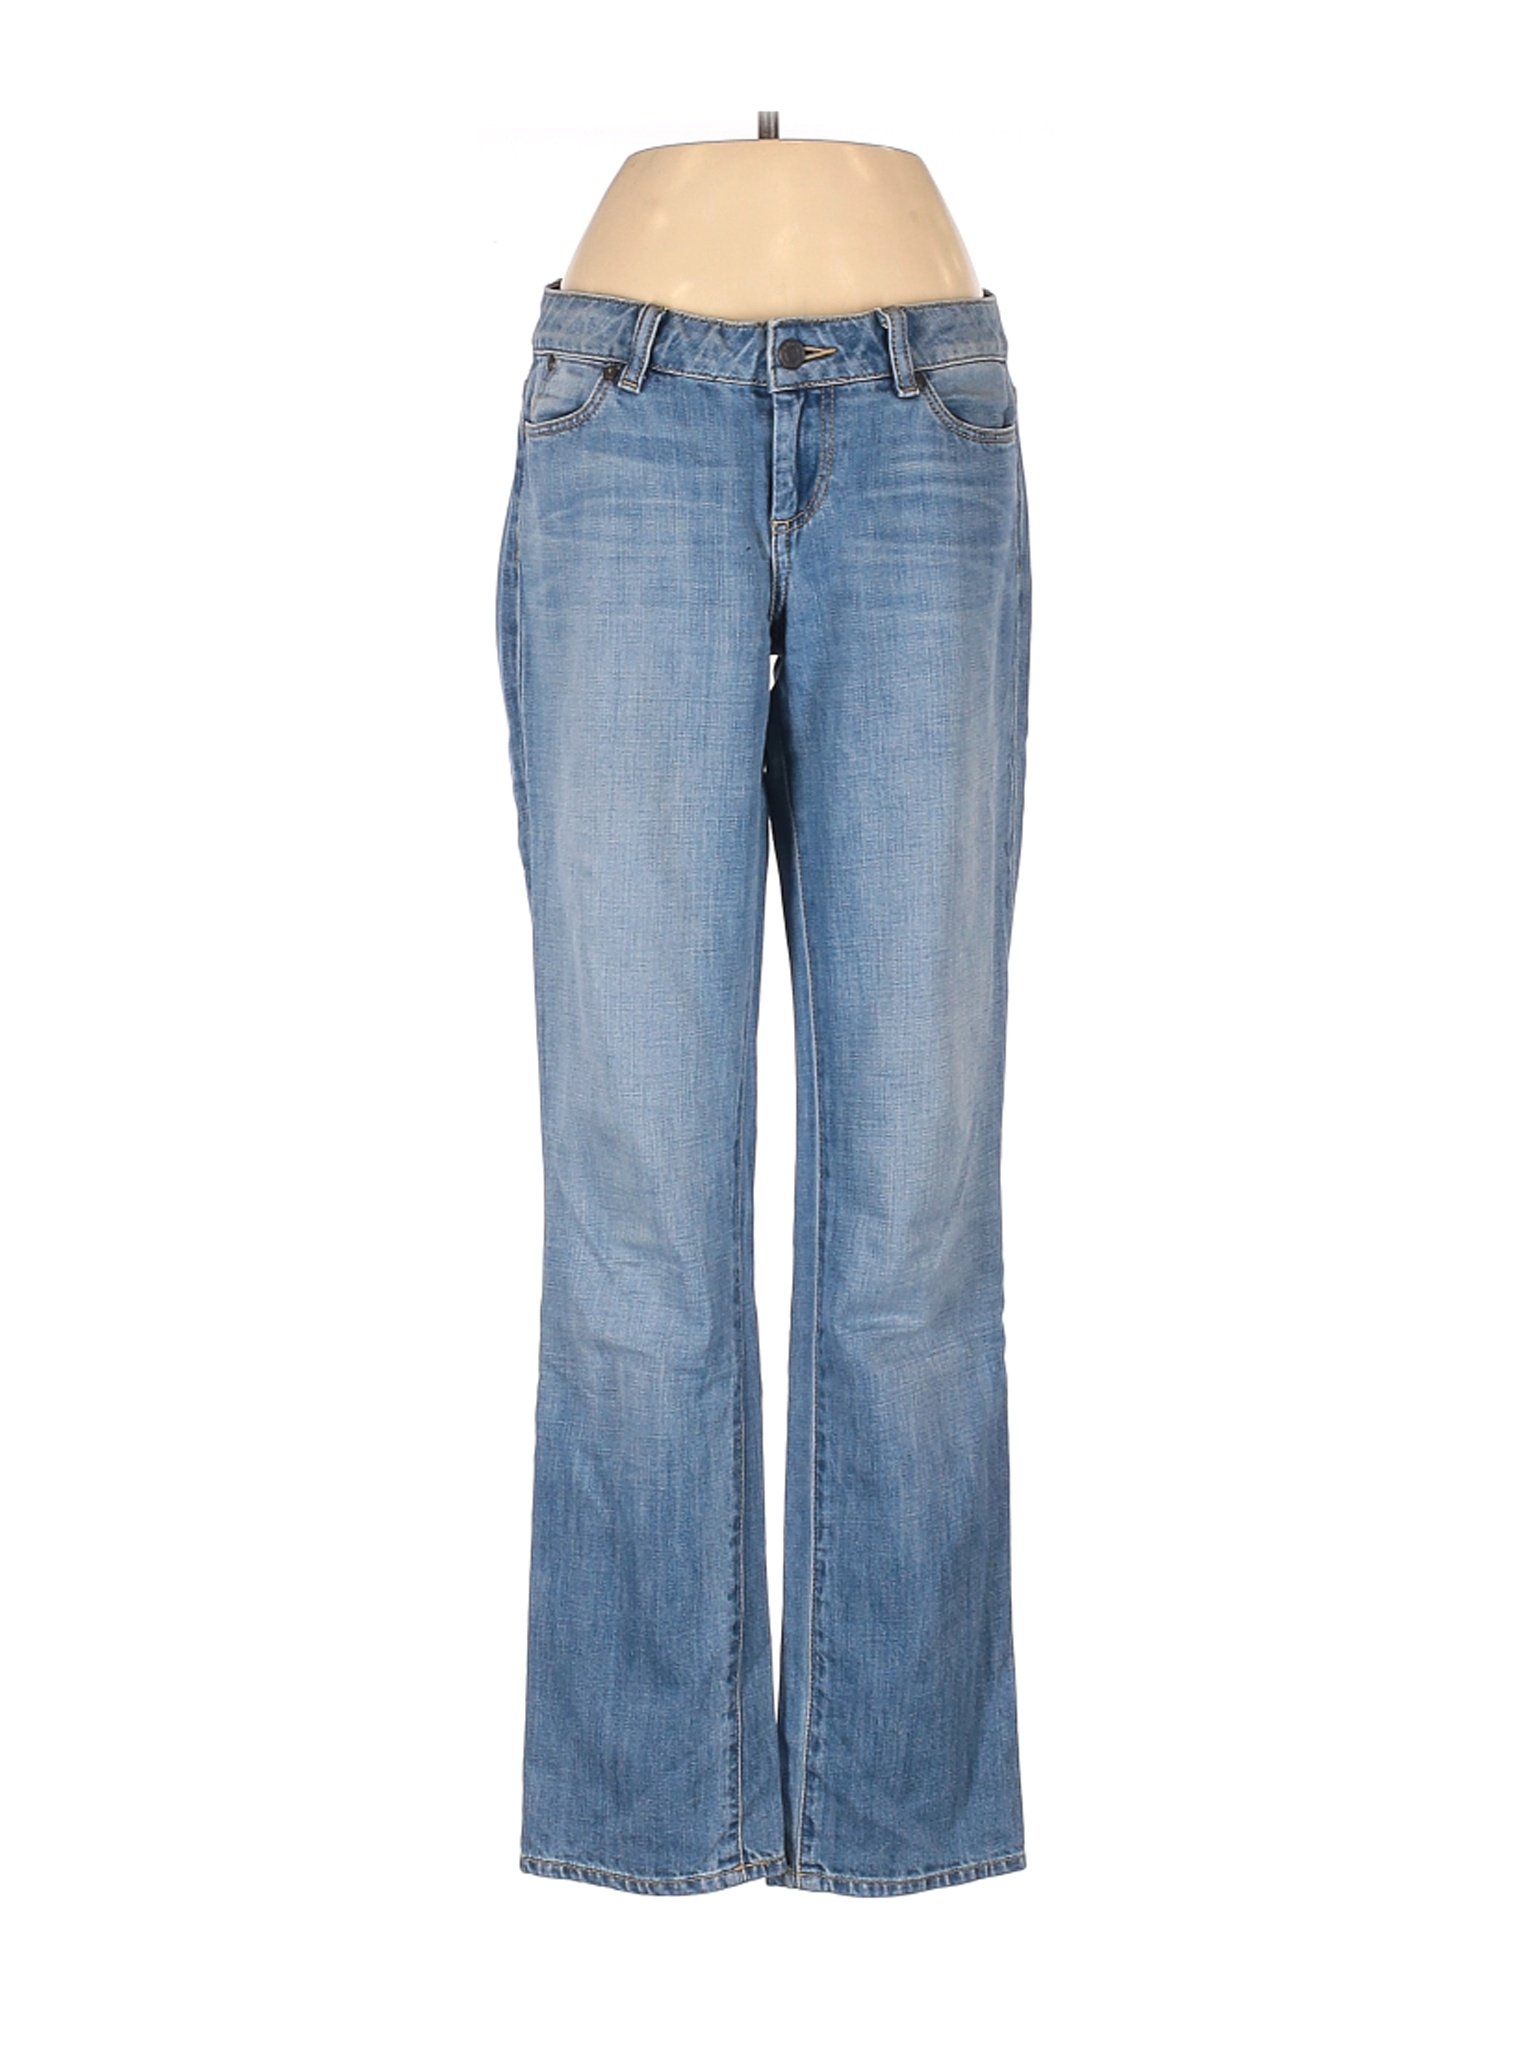 Talbots Women Blue Jeans 0 Petites | eBay